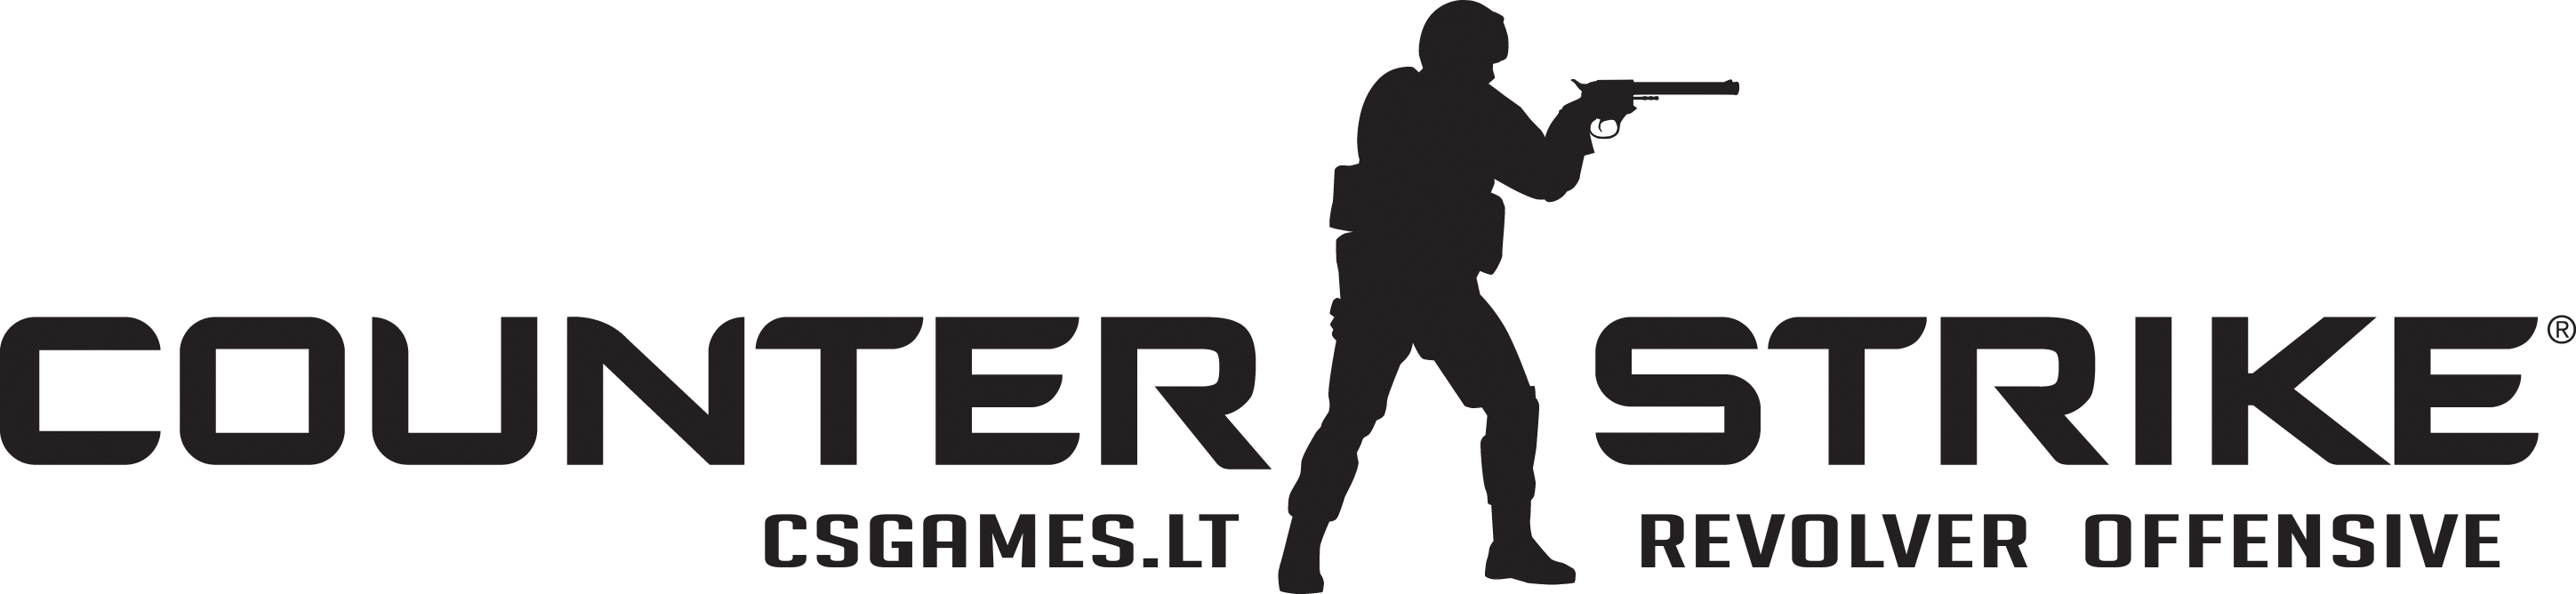 Counter-Strike Revolver Offensive